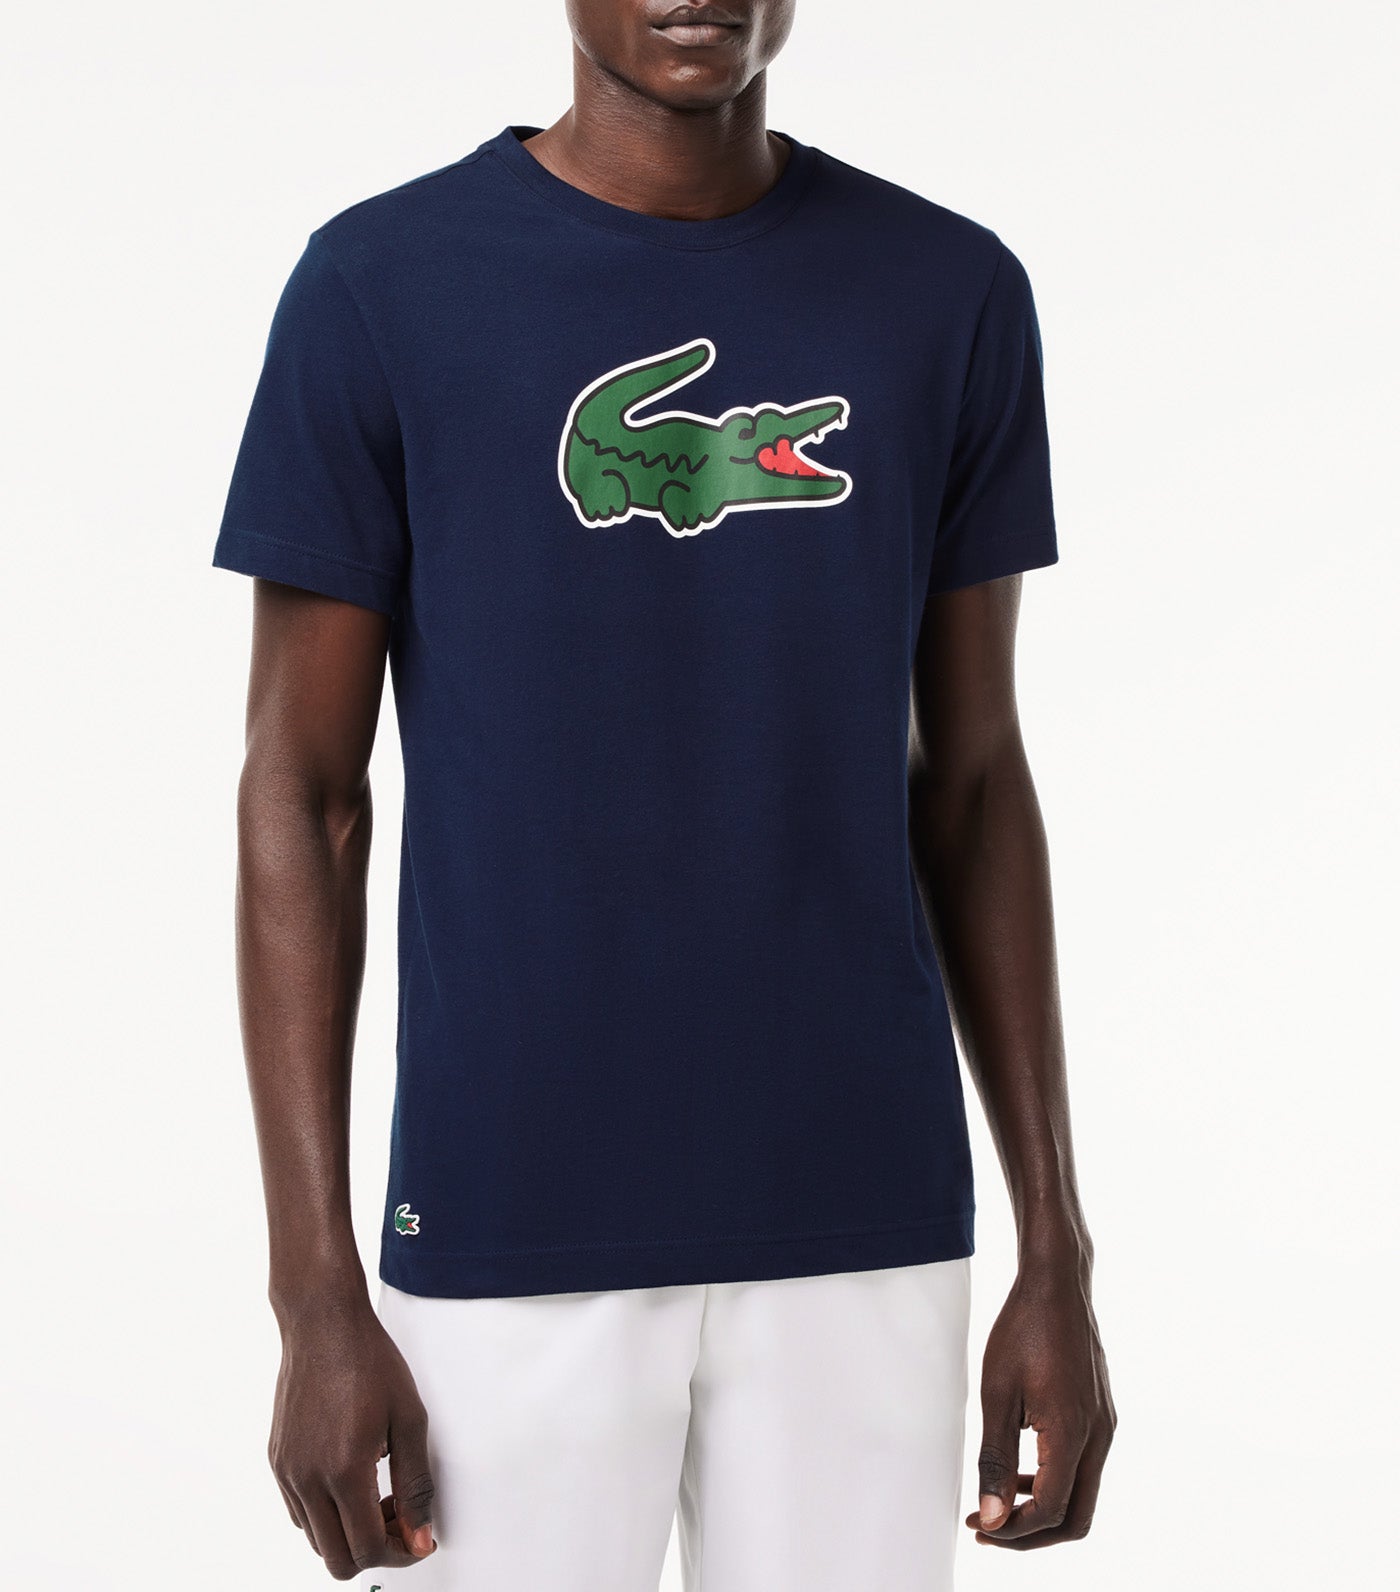 Sport Ultra-Dry Croc Print T-Shirt Navy Blue/Green-White